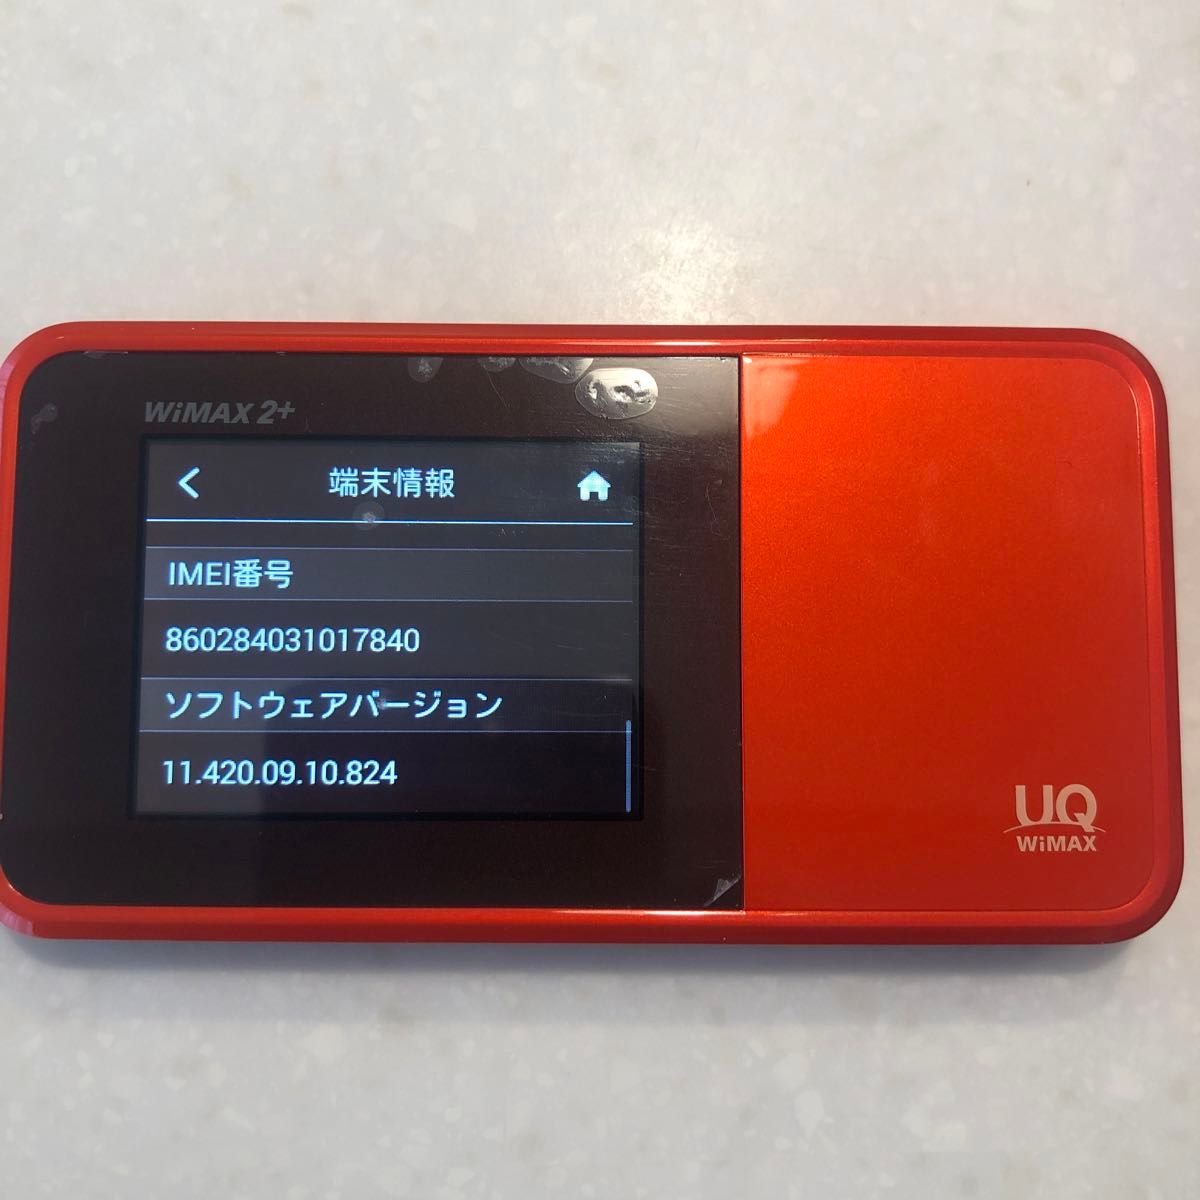 UQ WiMAX 2+ モバイルルーター　赤